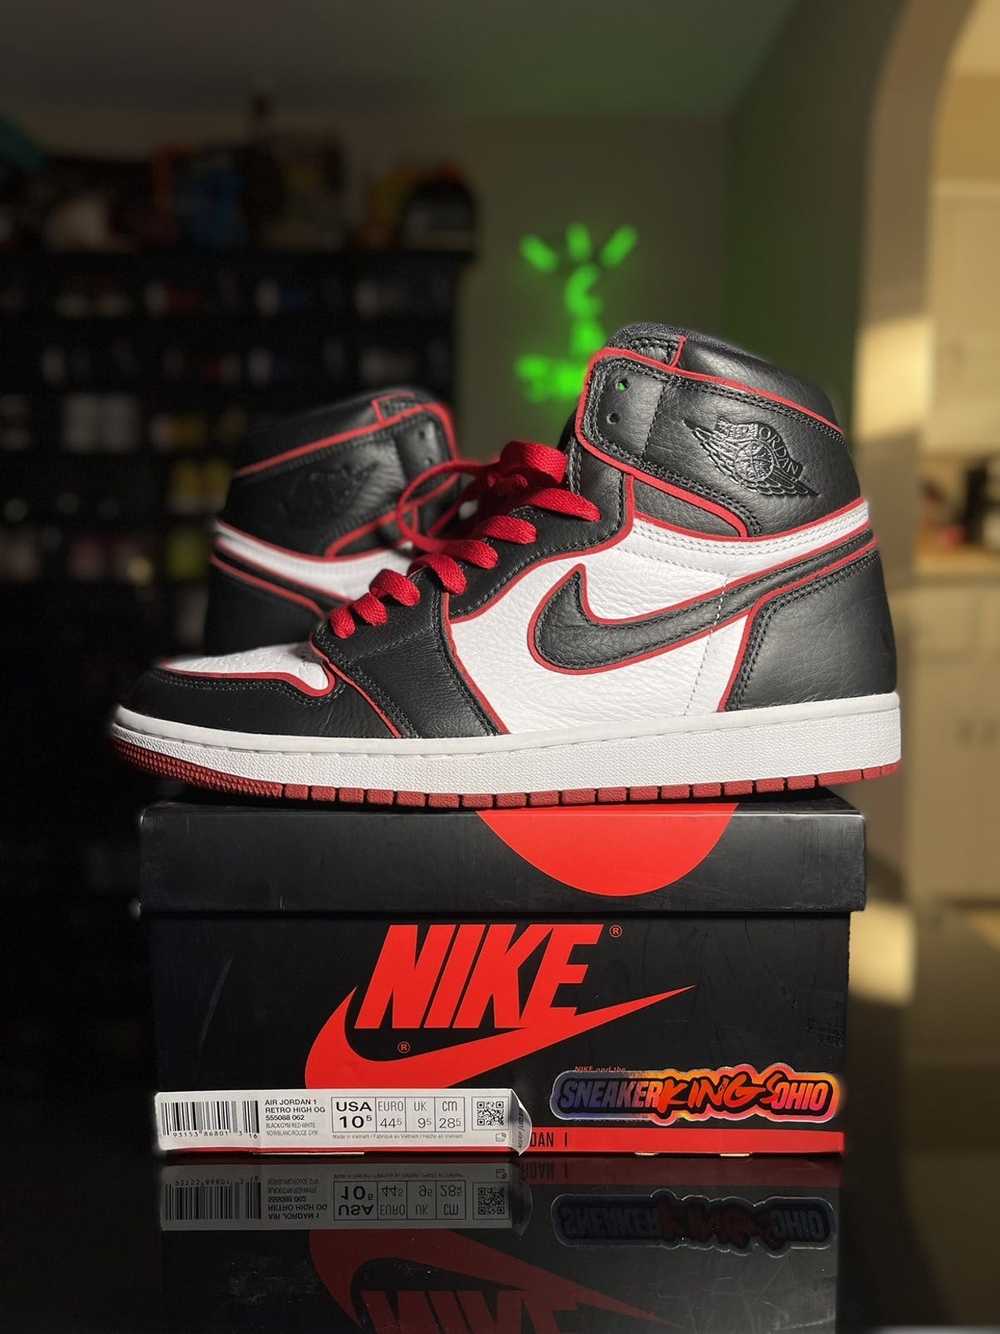 Jordan Brand Nike Air Jordan 1 “Bloodline” - image 1